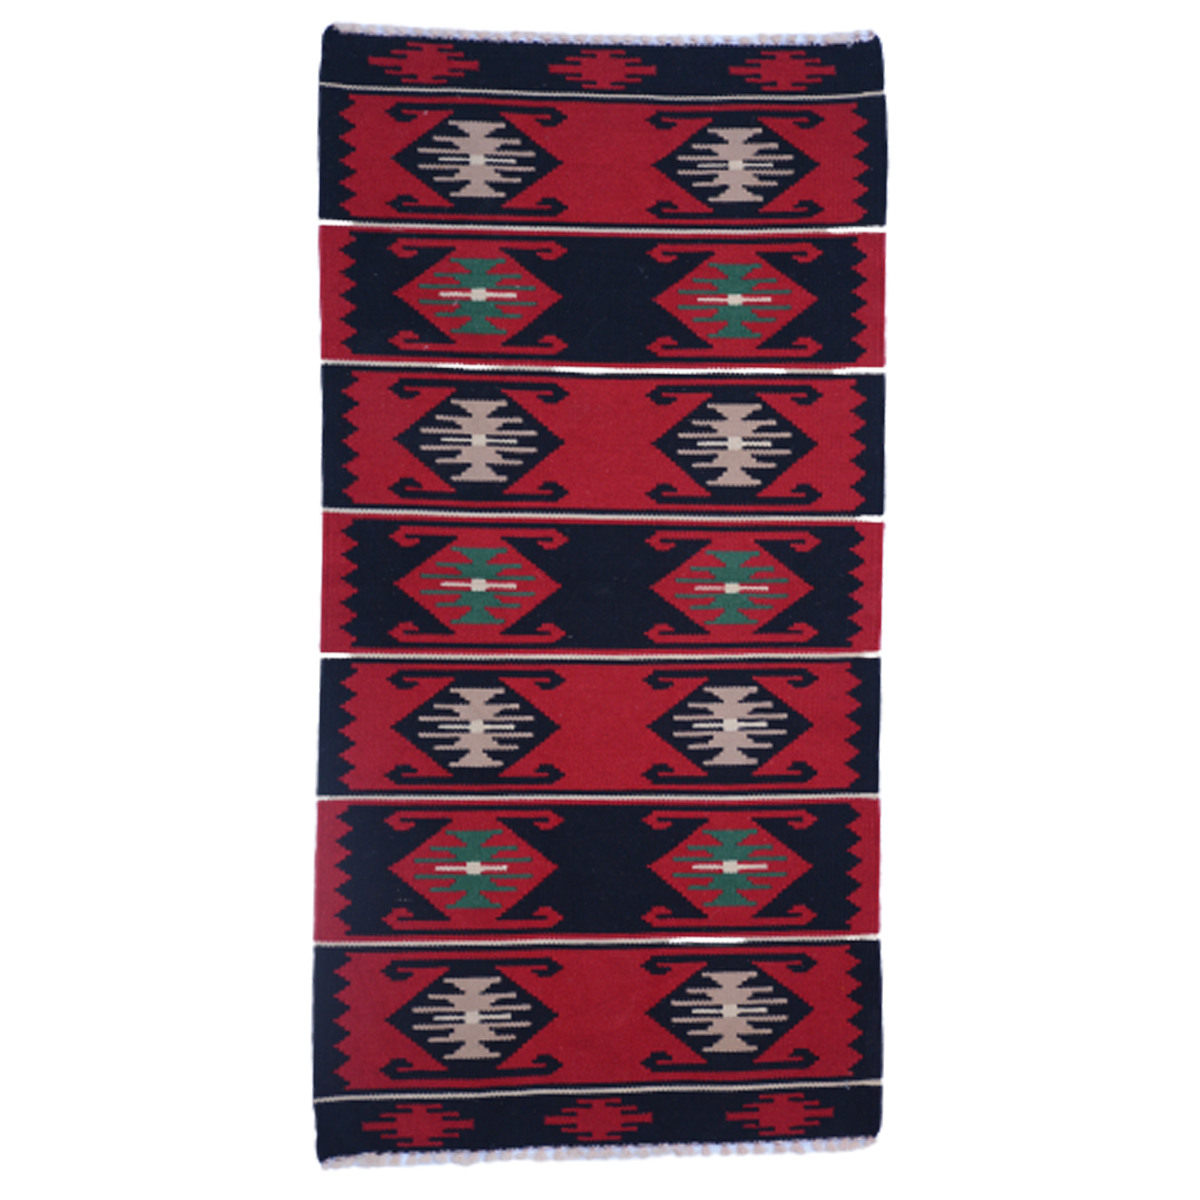 Aztec -Handgjord- Mexikansk- Röd- Vintage- Matta